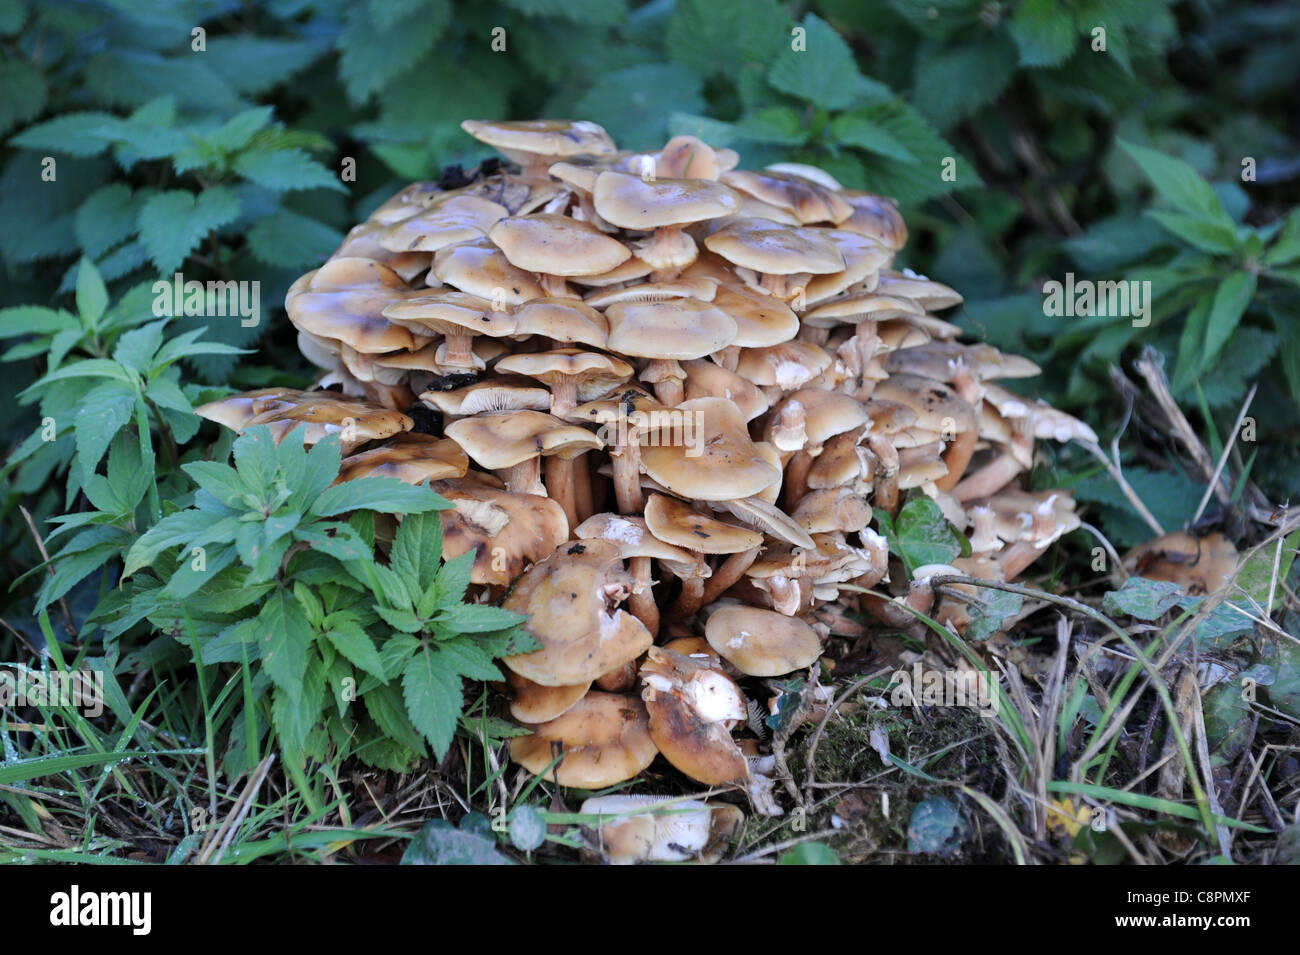 A clump of wild fungi uk Stock Photo